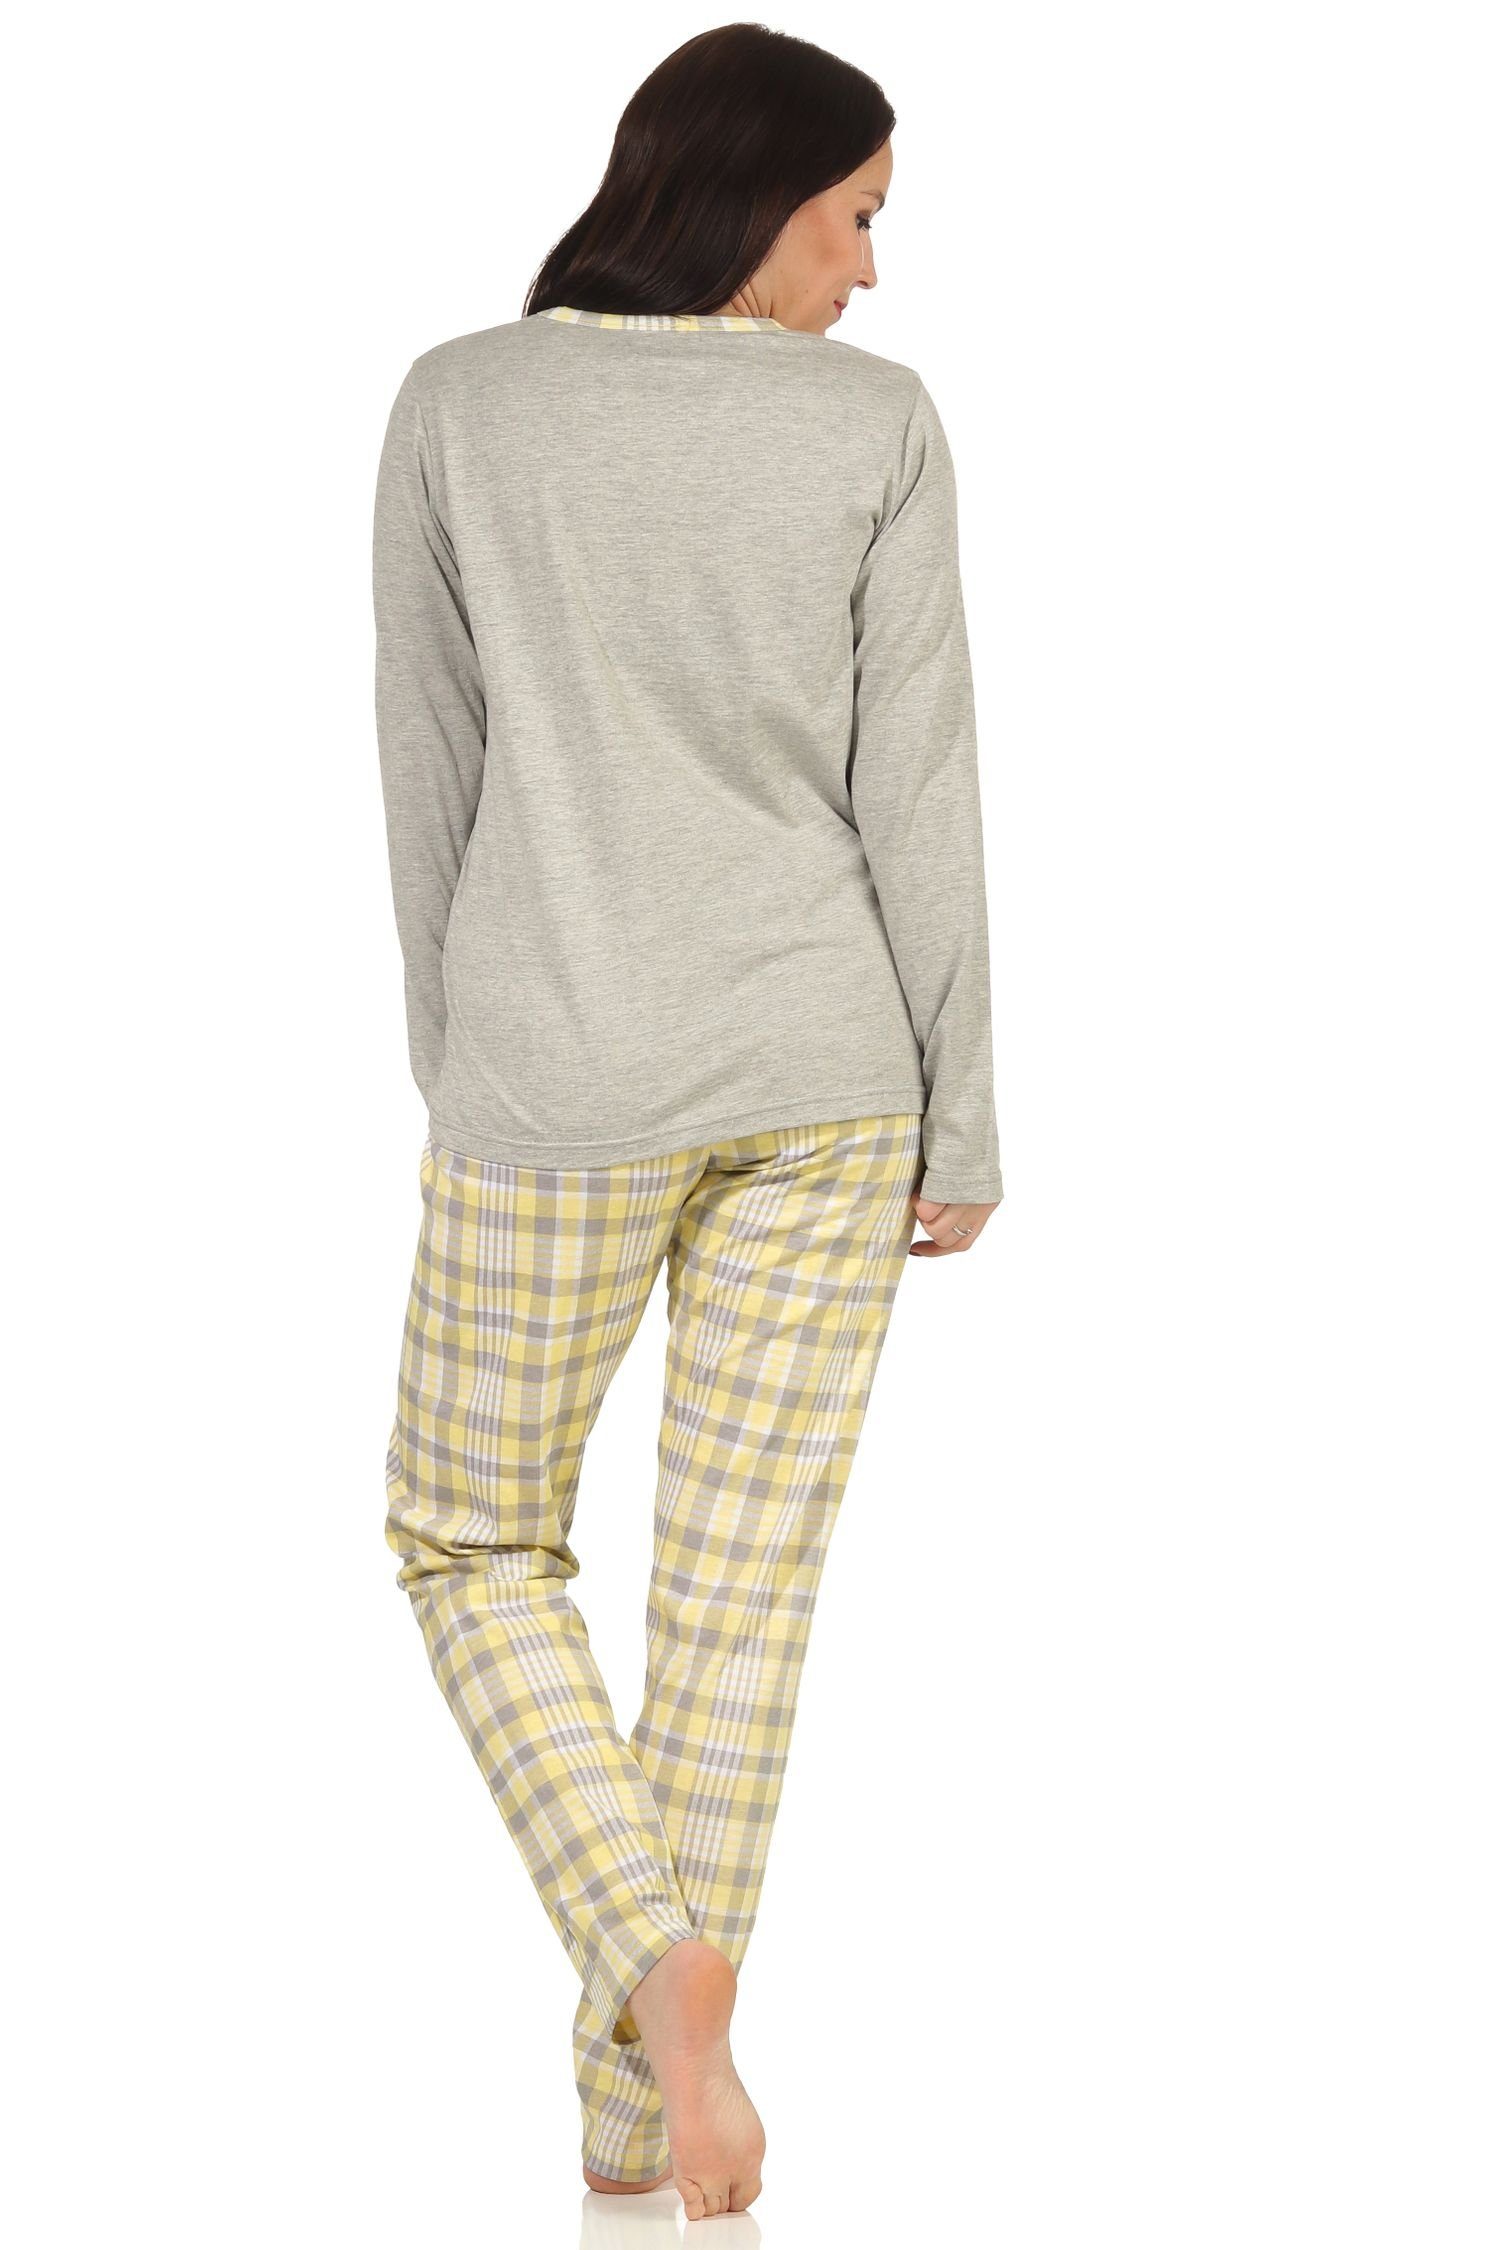 112 Pyjama mit langarm, Pyjama 10 Schlafanzug Normann Damen Karo-Muster gelb 733 -